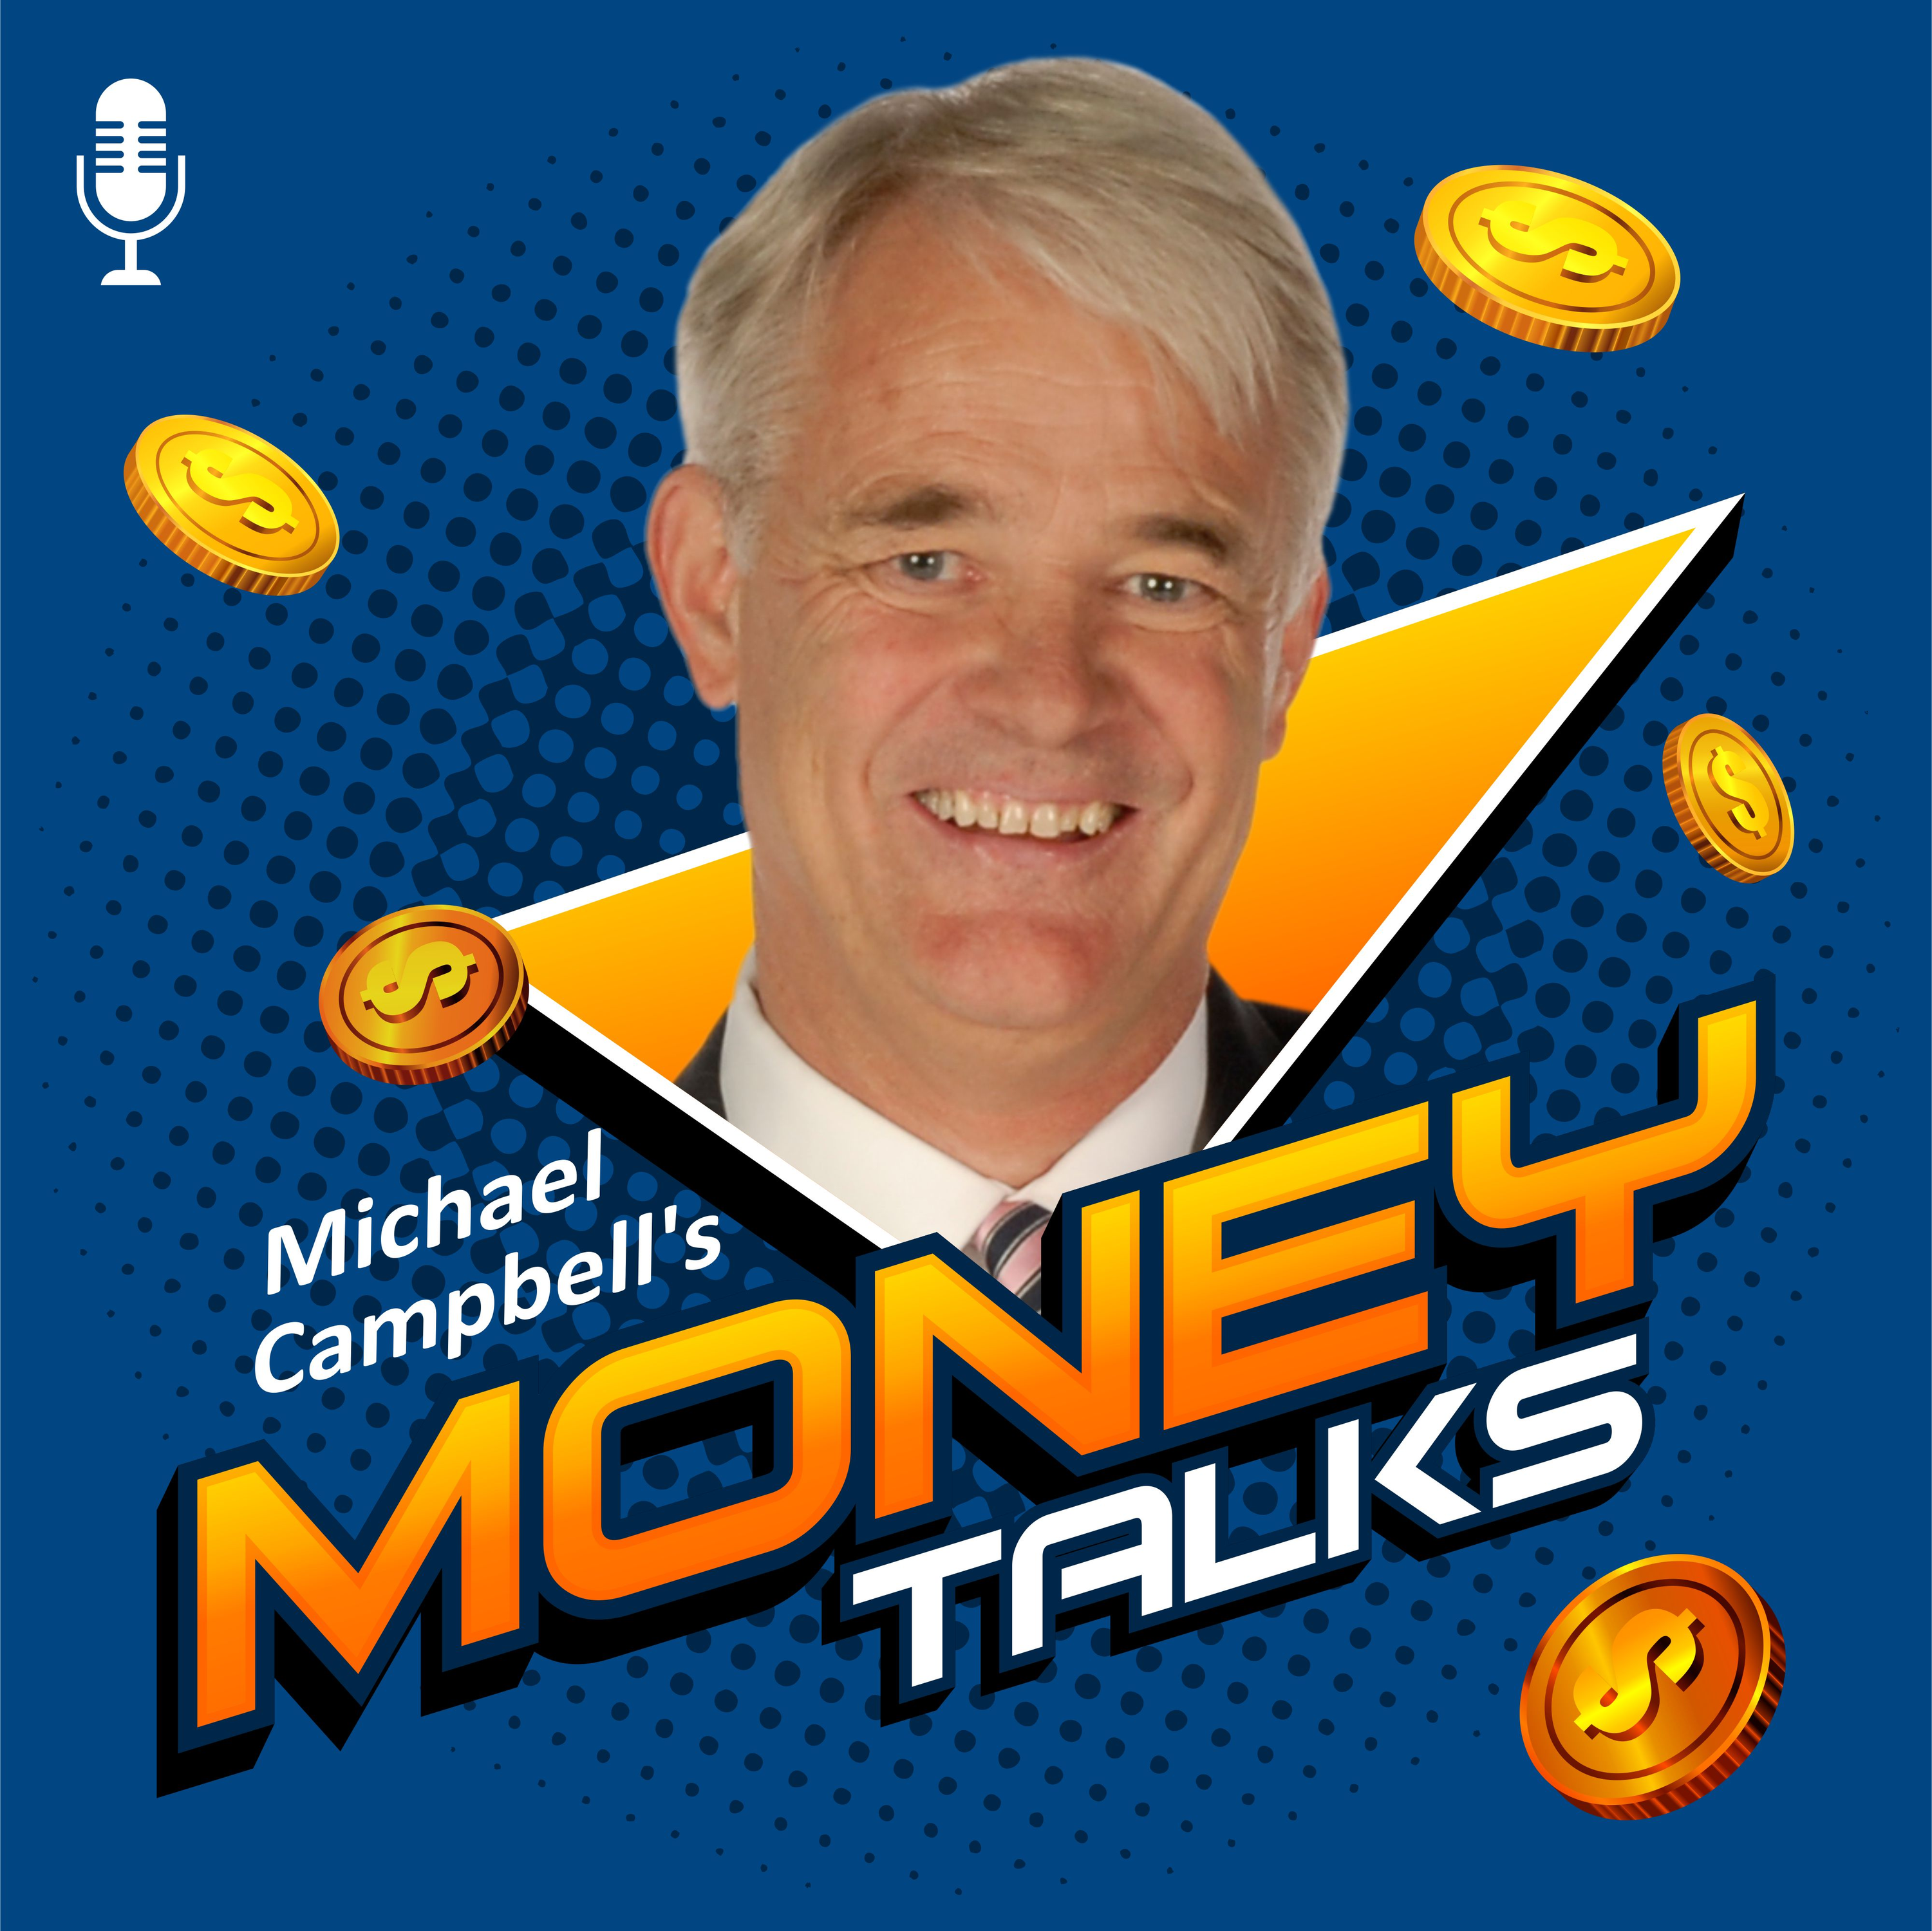 Luke Gromen on MoneyTalks